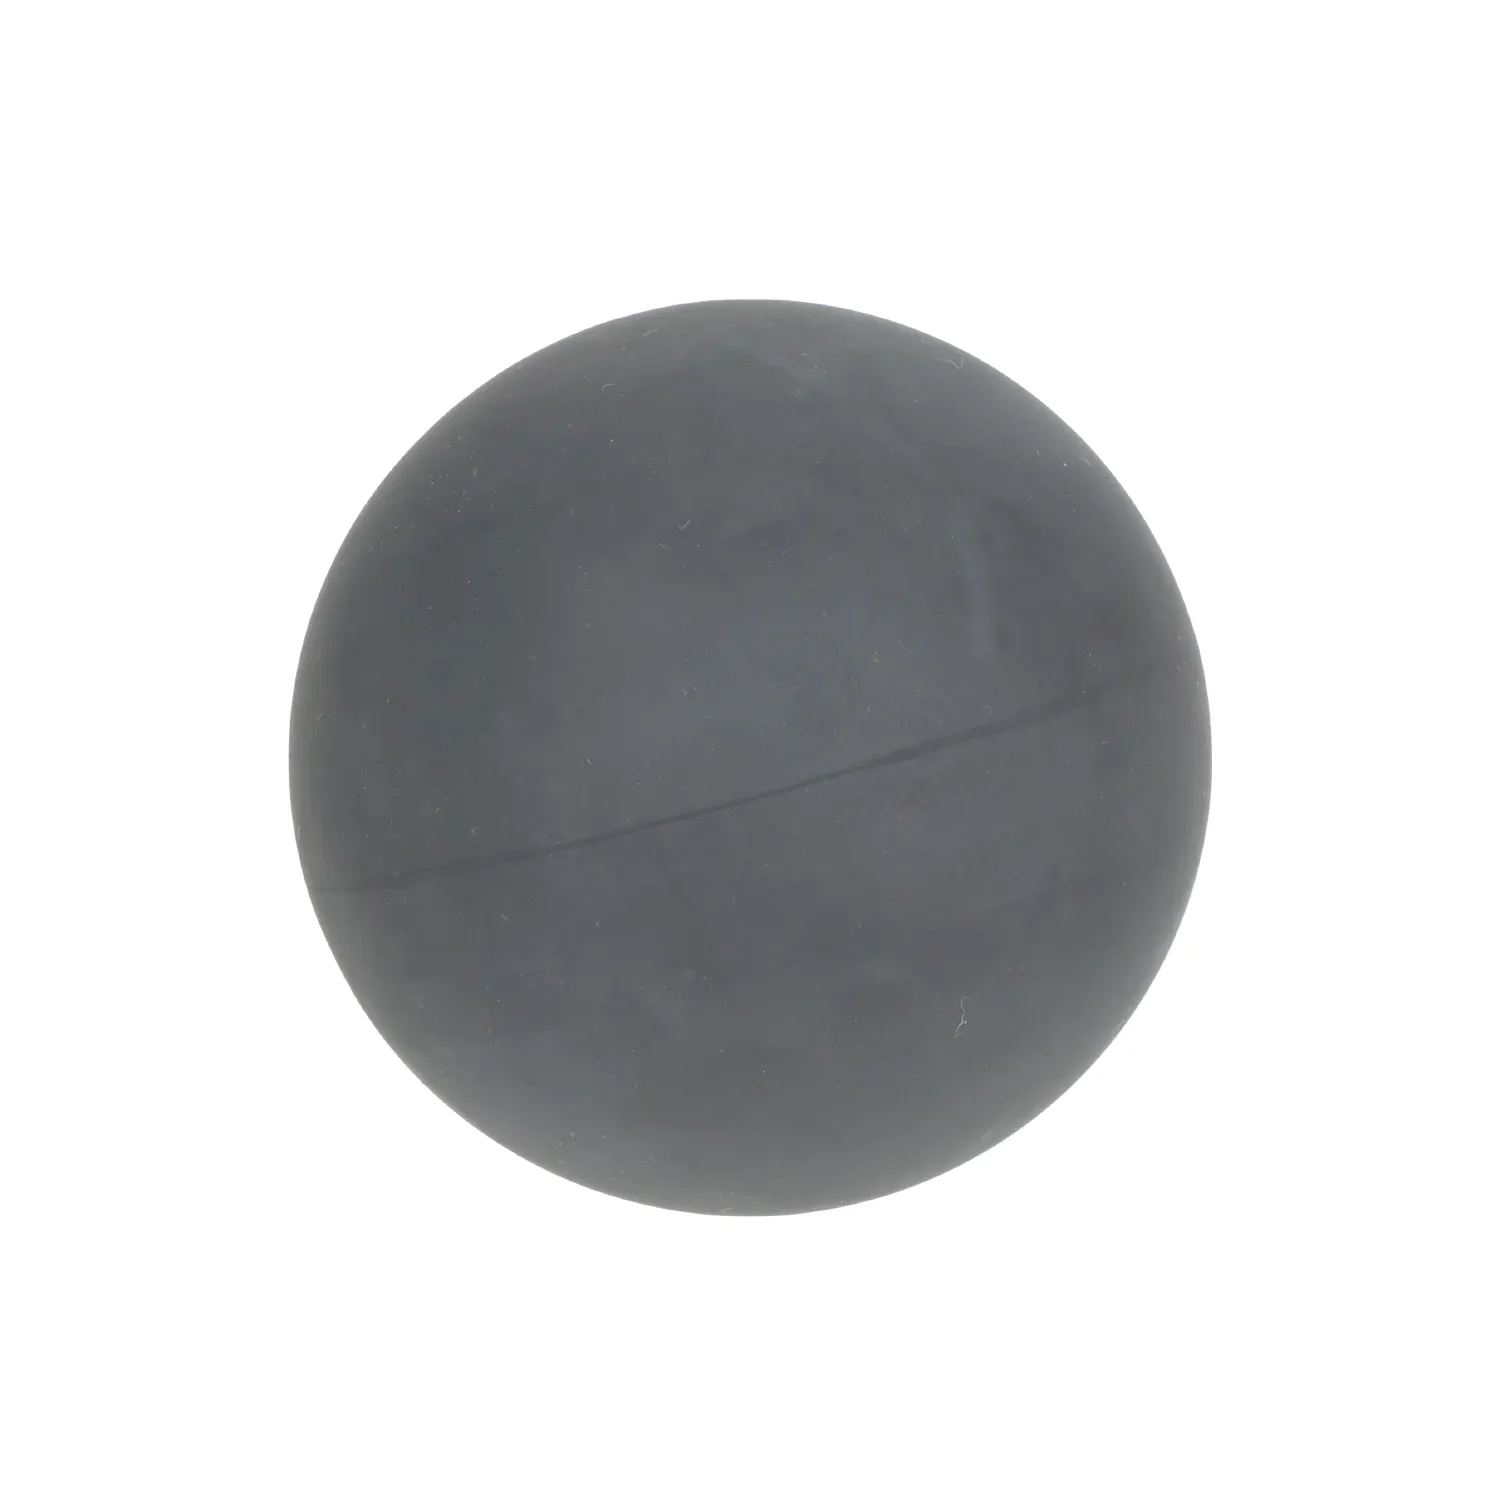 अन्य रबर पार्ट्स निर्माता शेन्ज़ेन के लिए रबर से धातु बॉन्डिंग के साथ उच्च गुणवत्ता वाले कस्टम मोल्ड सीमलेस सॉलिड रबर बॉल